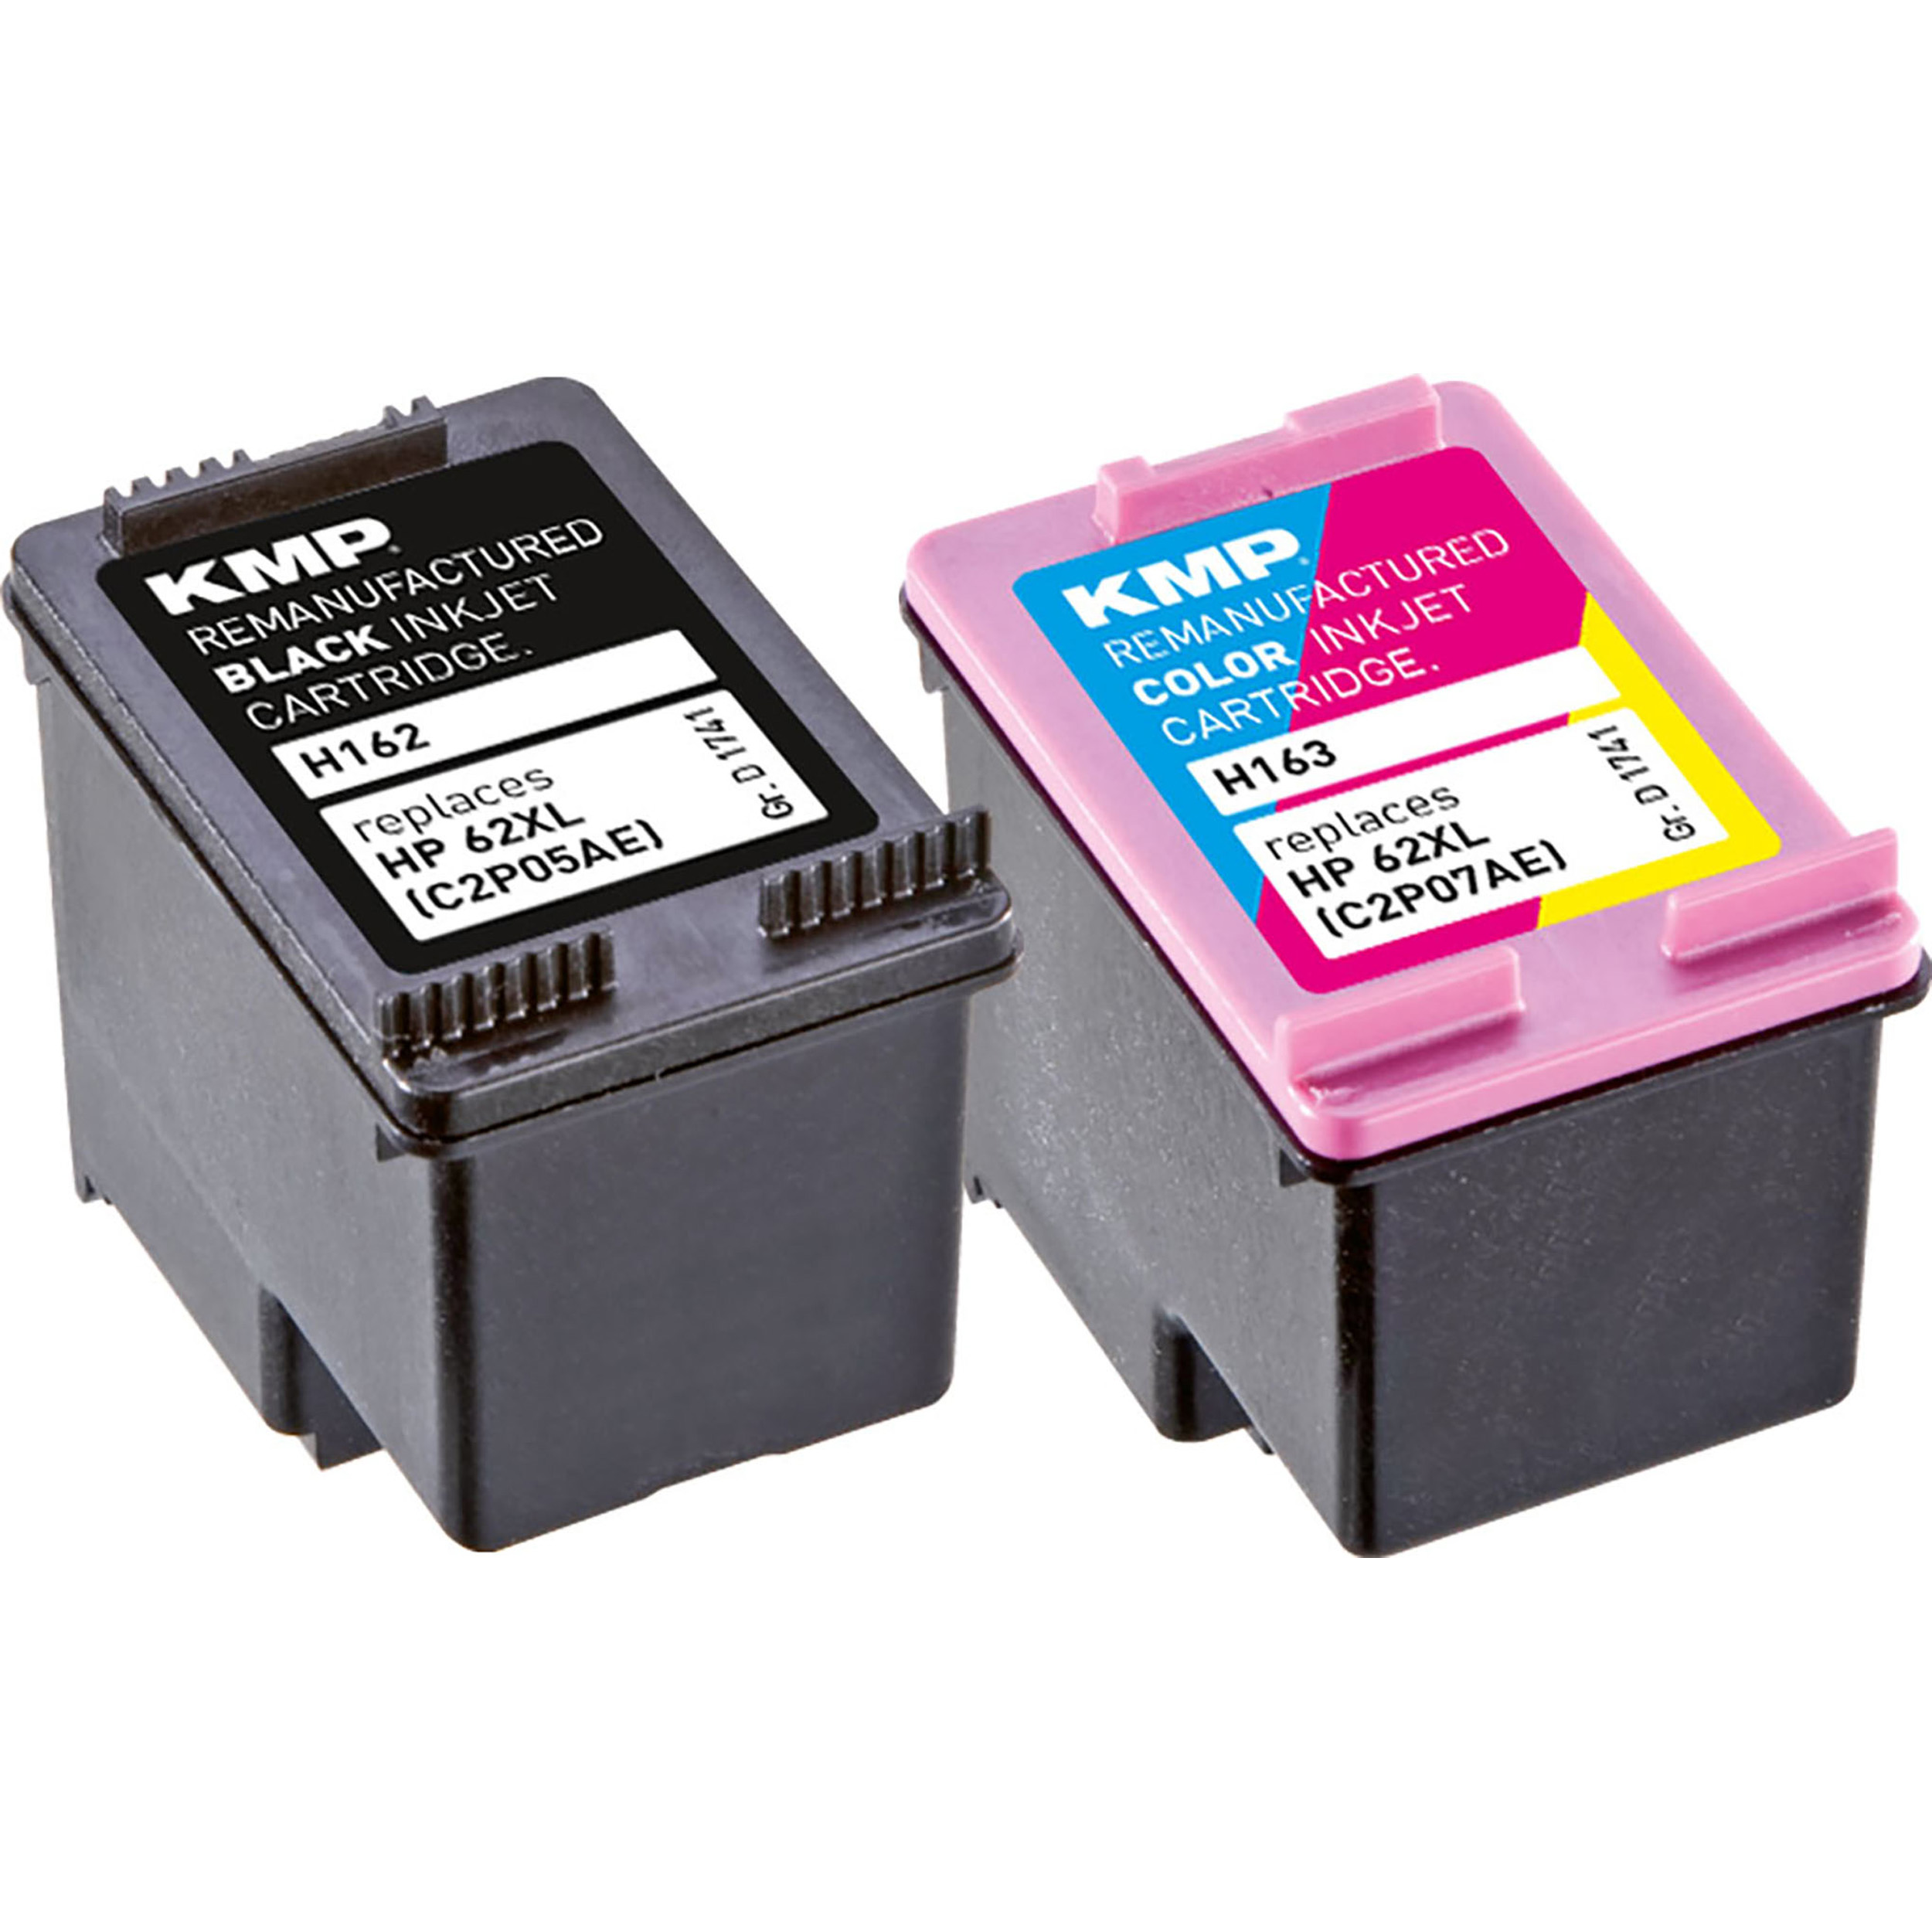 KMP Tintenpatrone für C2P07AE) BK,C,M,Y HP C2P07AE) Cartridge Ink (C2P05AE, Multipack schwarz, (C2P05AE, 62XL 3-farbig